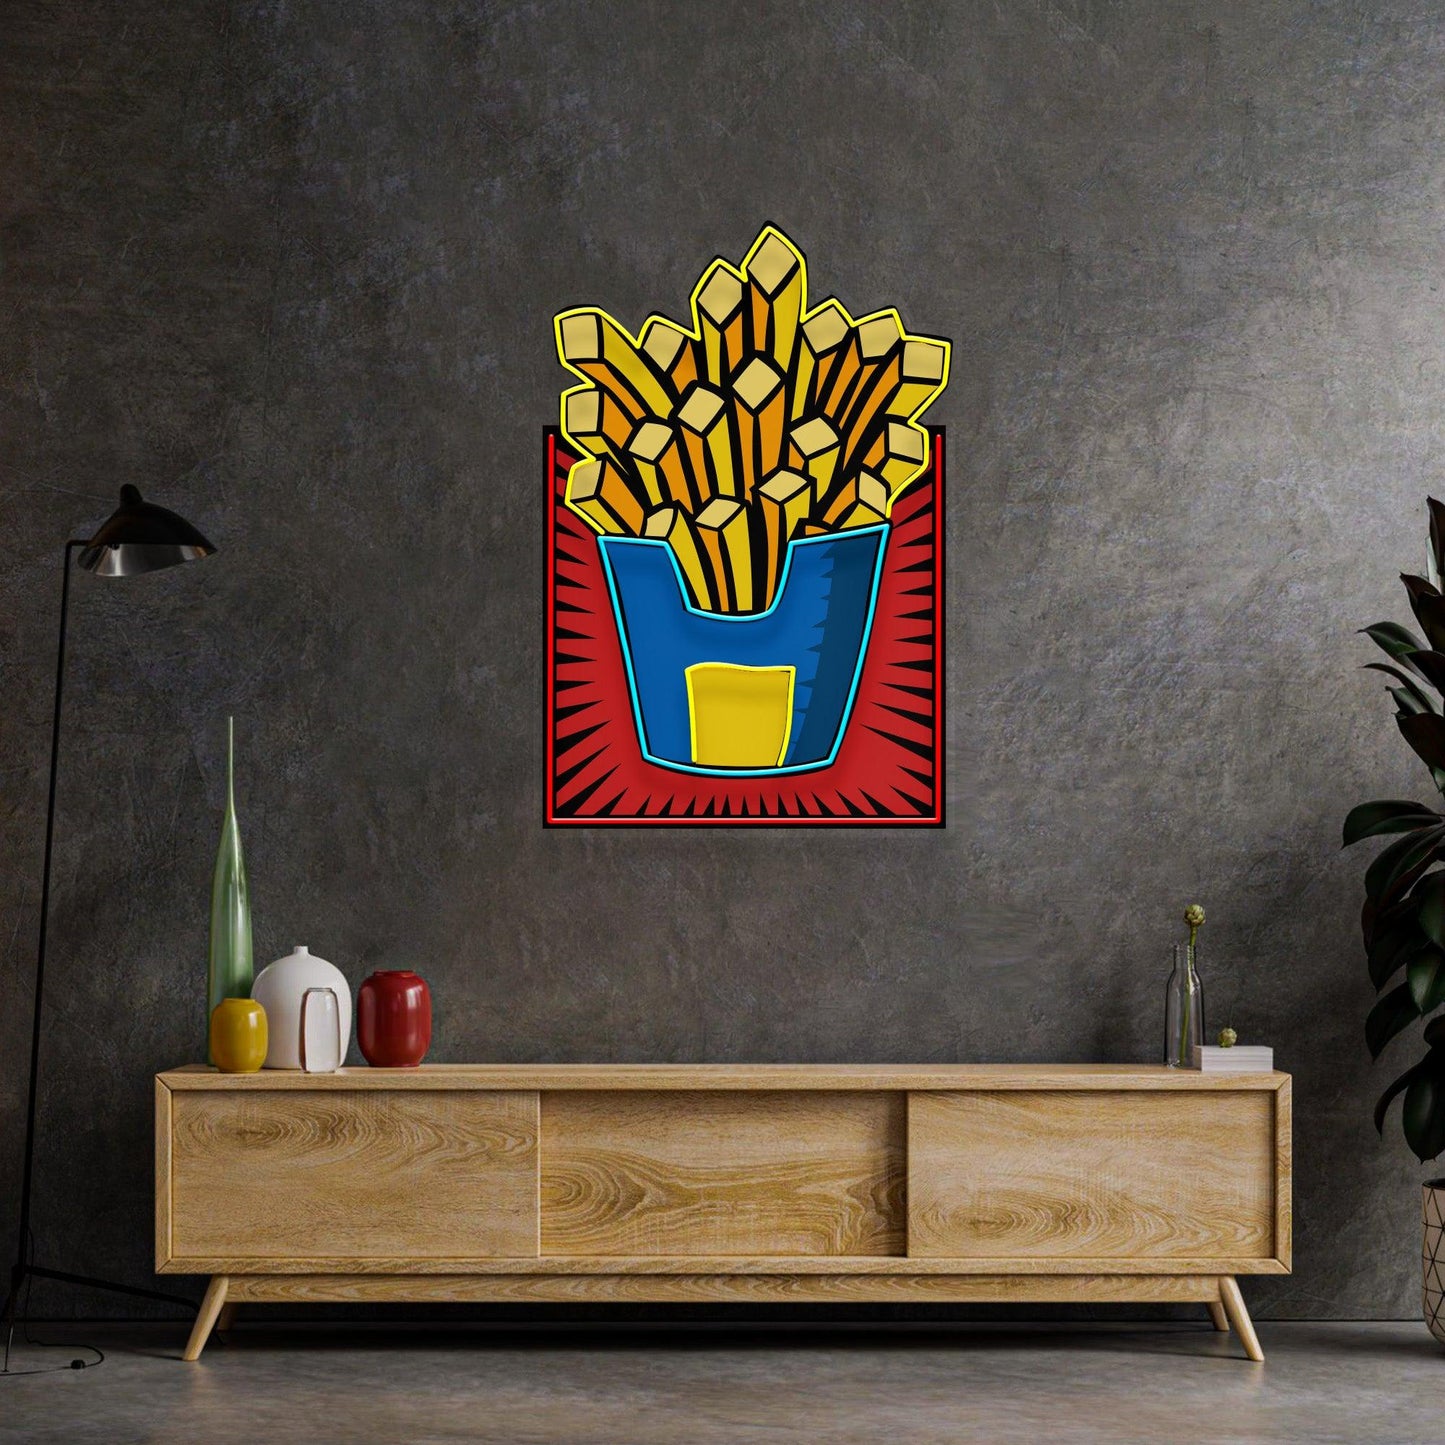 French Fries Led Neon Acrylic Artwork - Neonzastudio